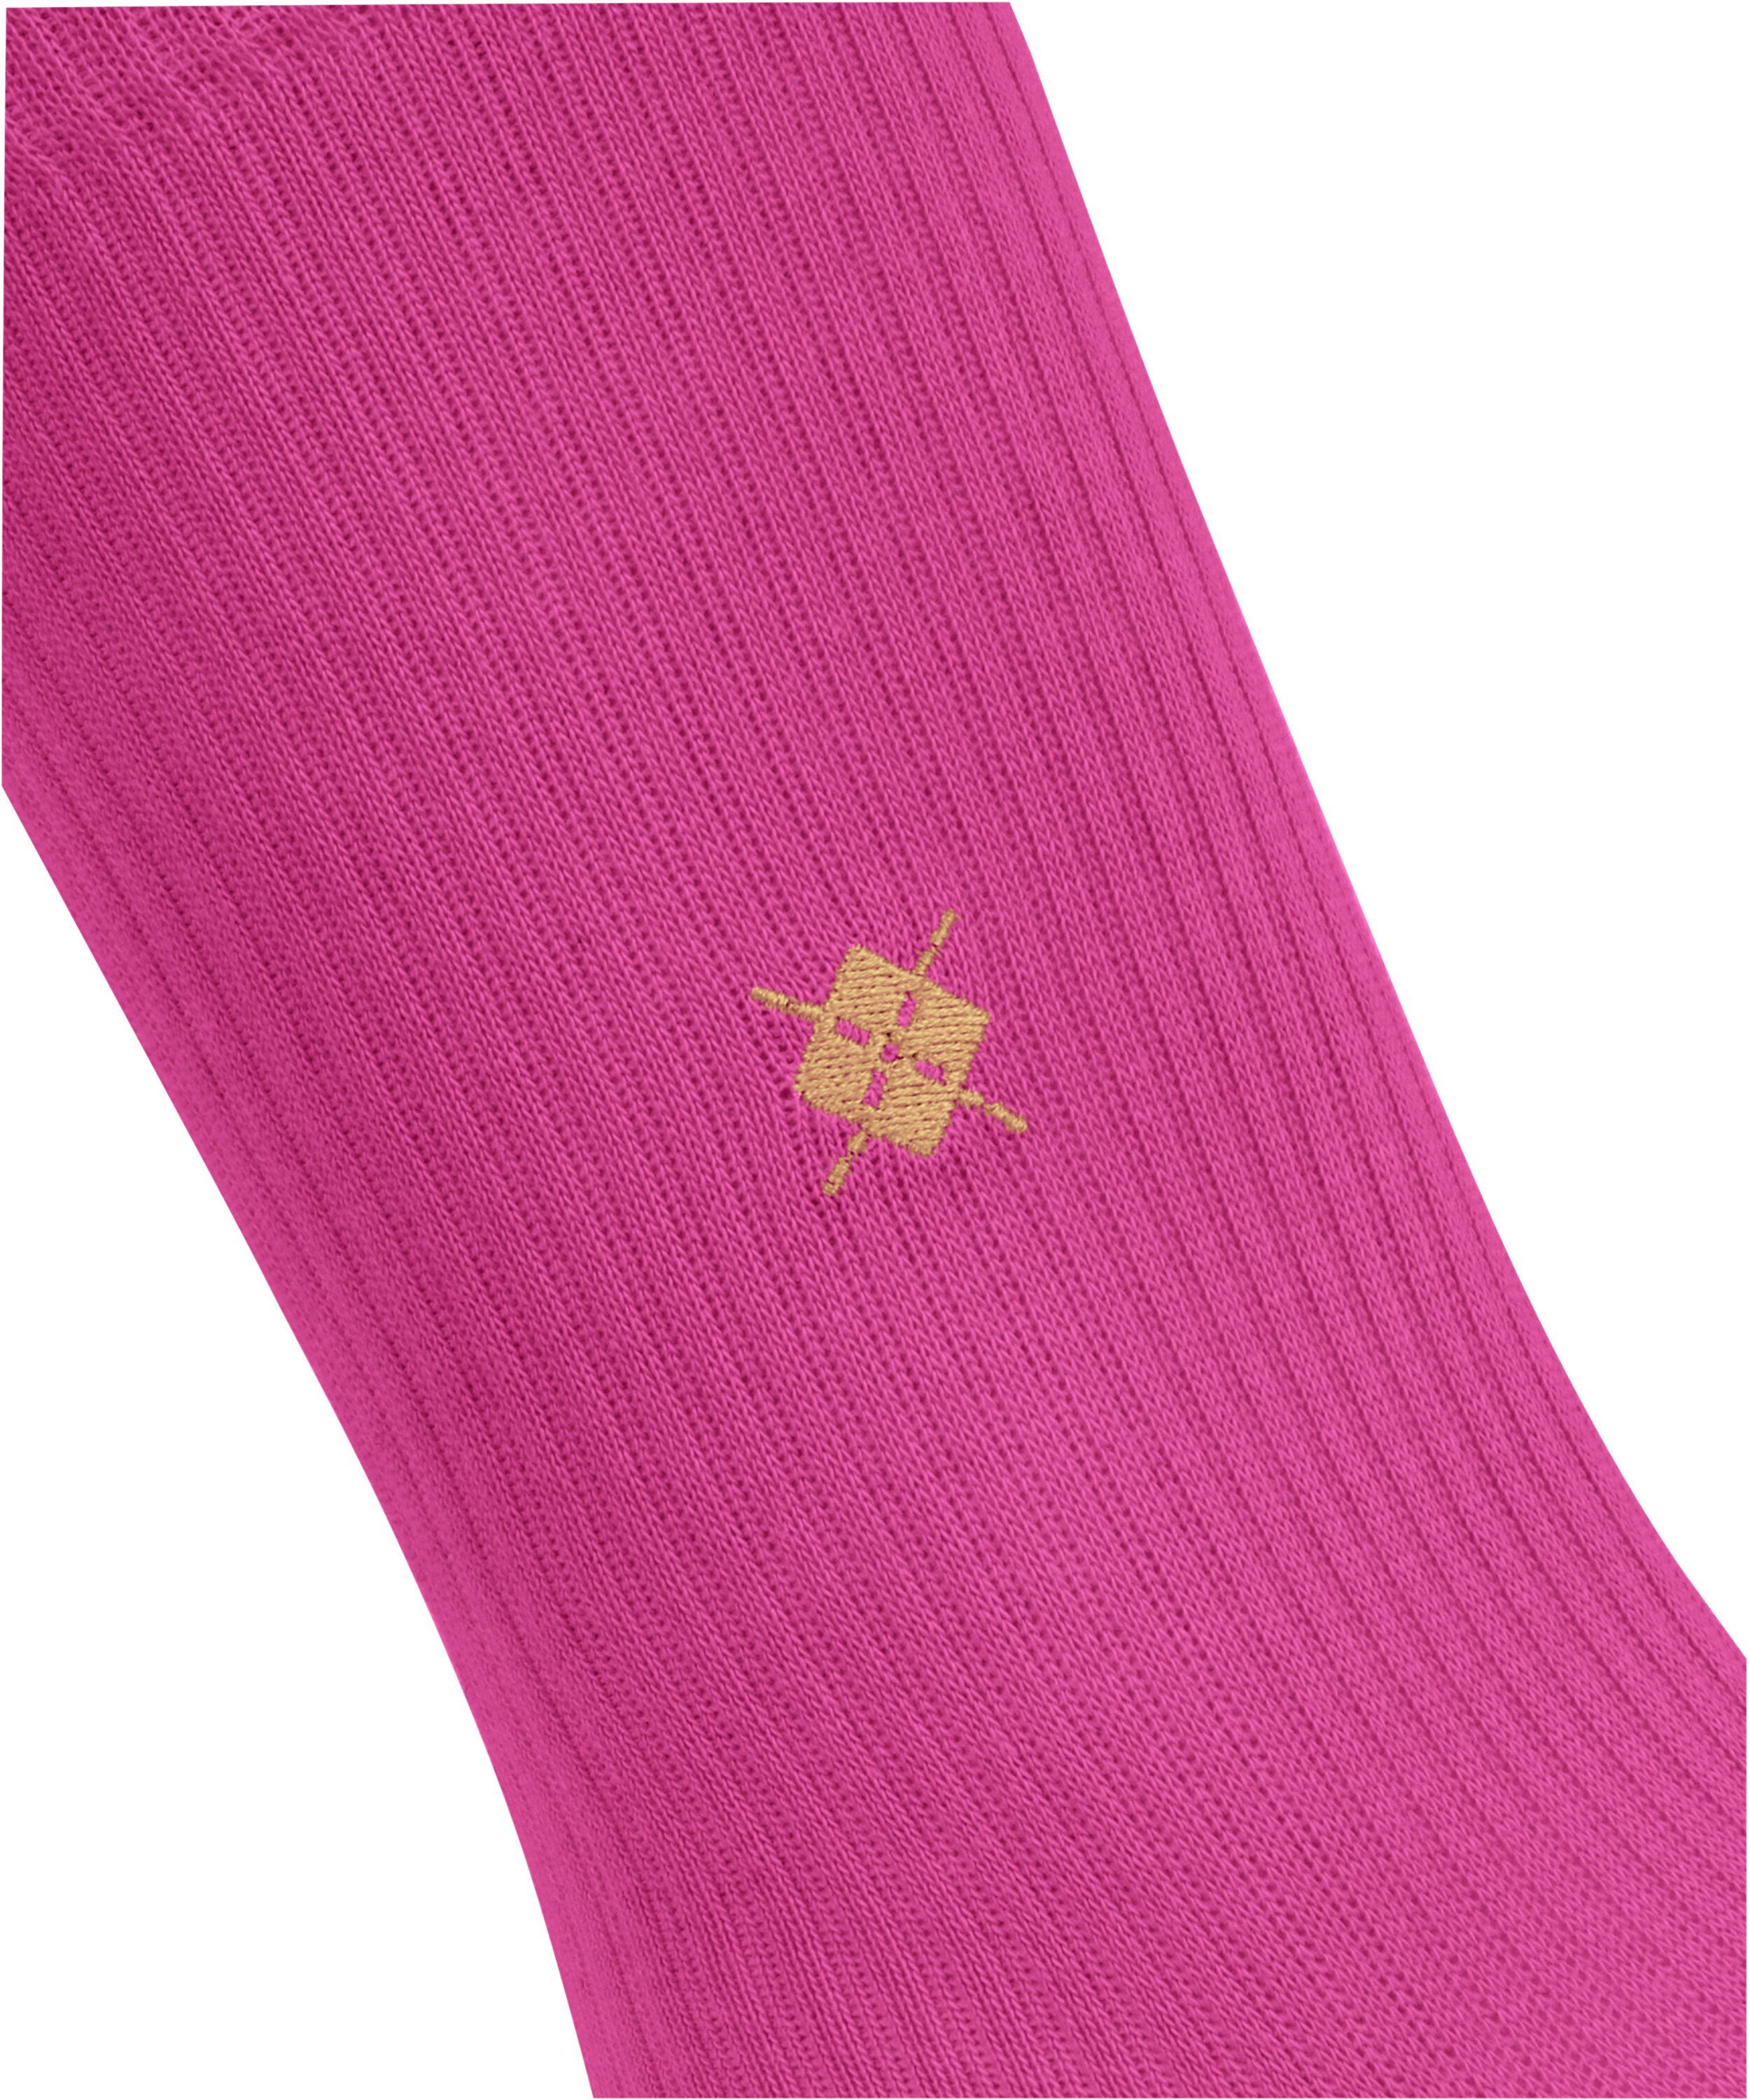 Burlington (8768) pink Socken (1-Paar) hot York